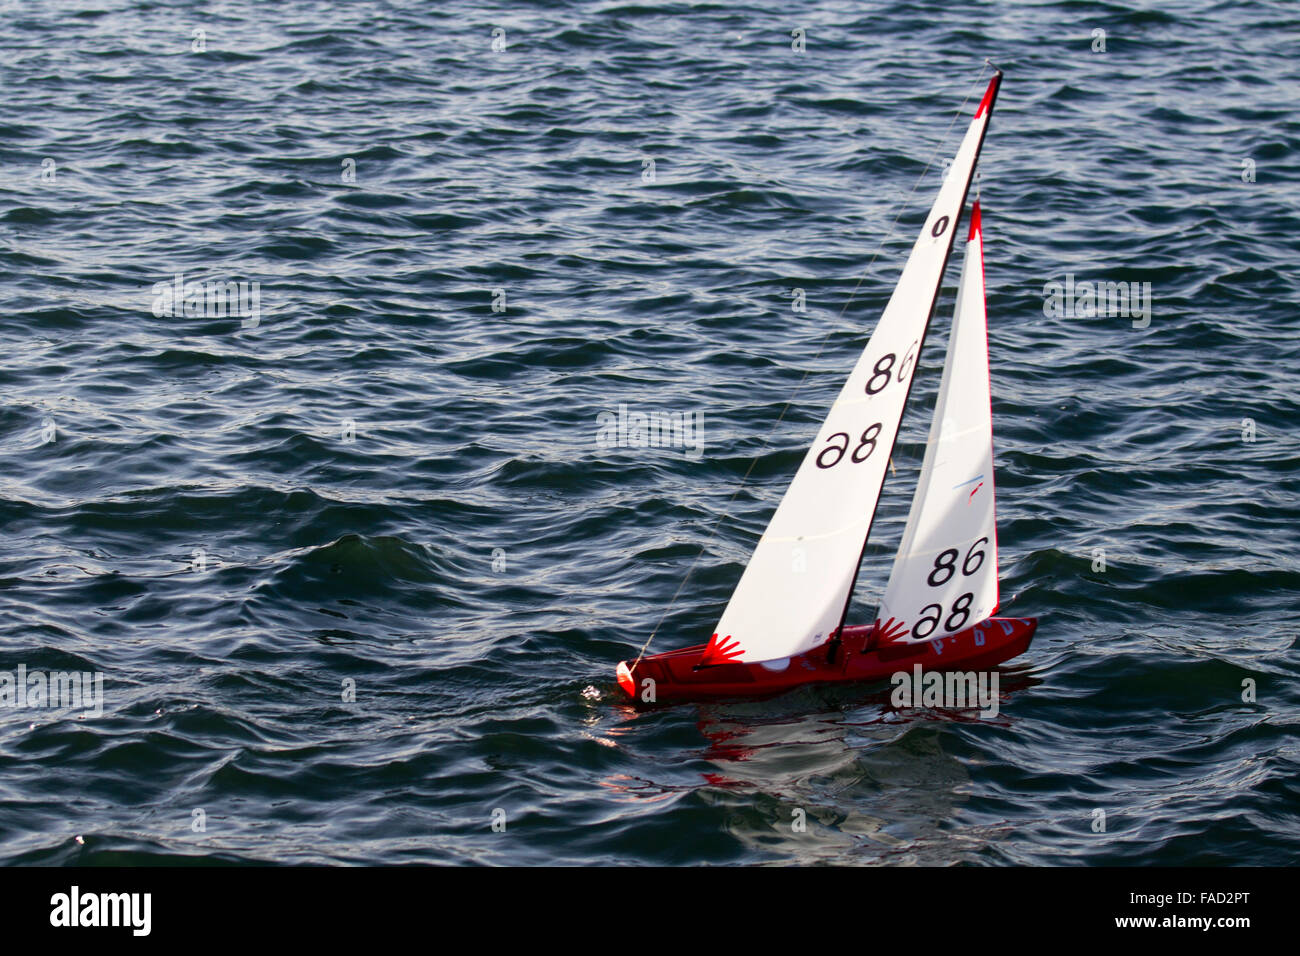 used iom rc sailboat